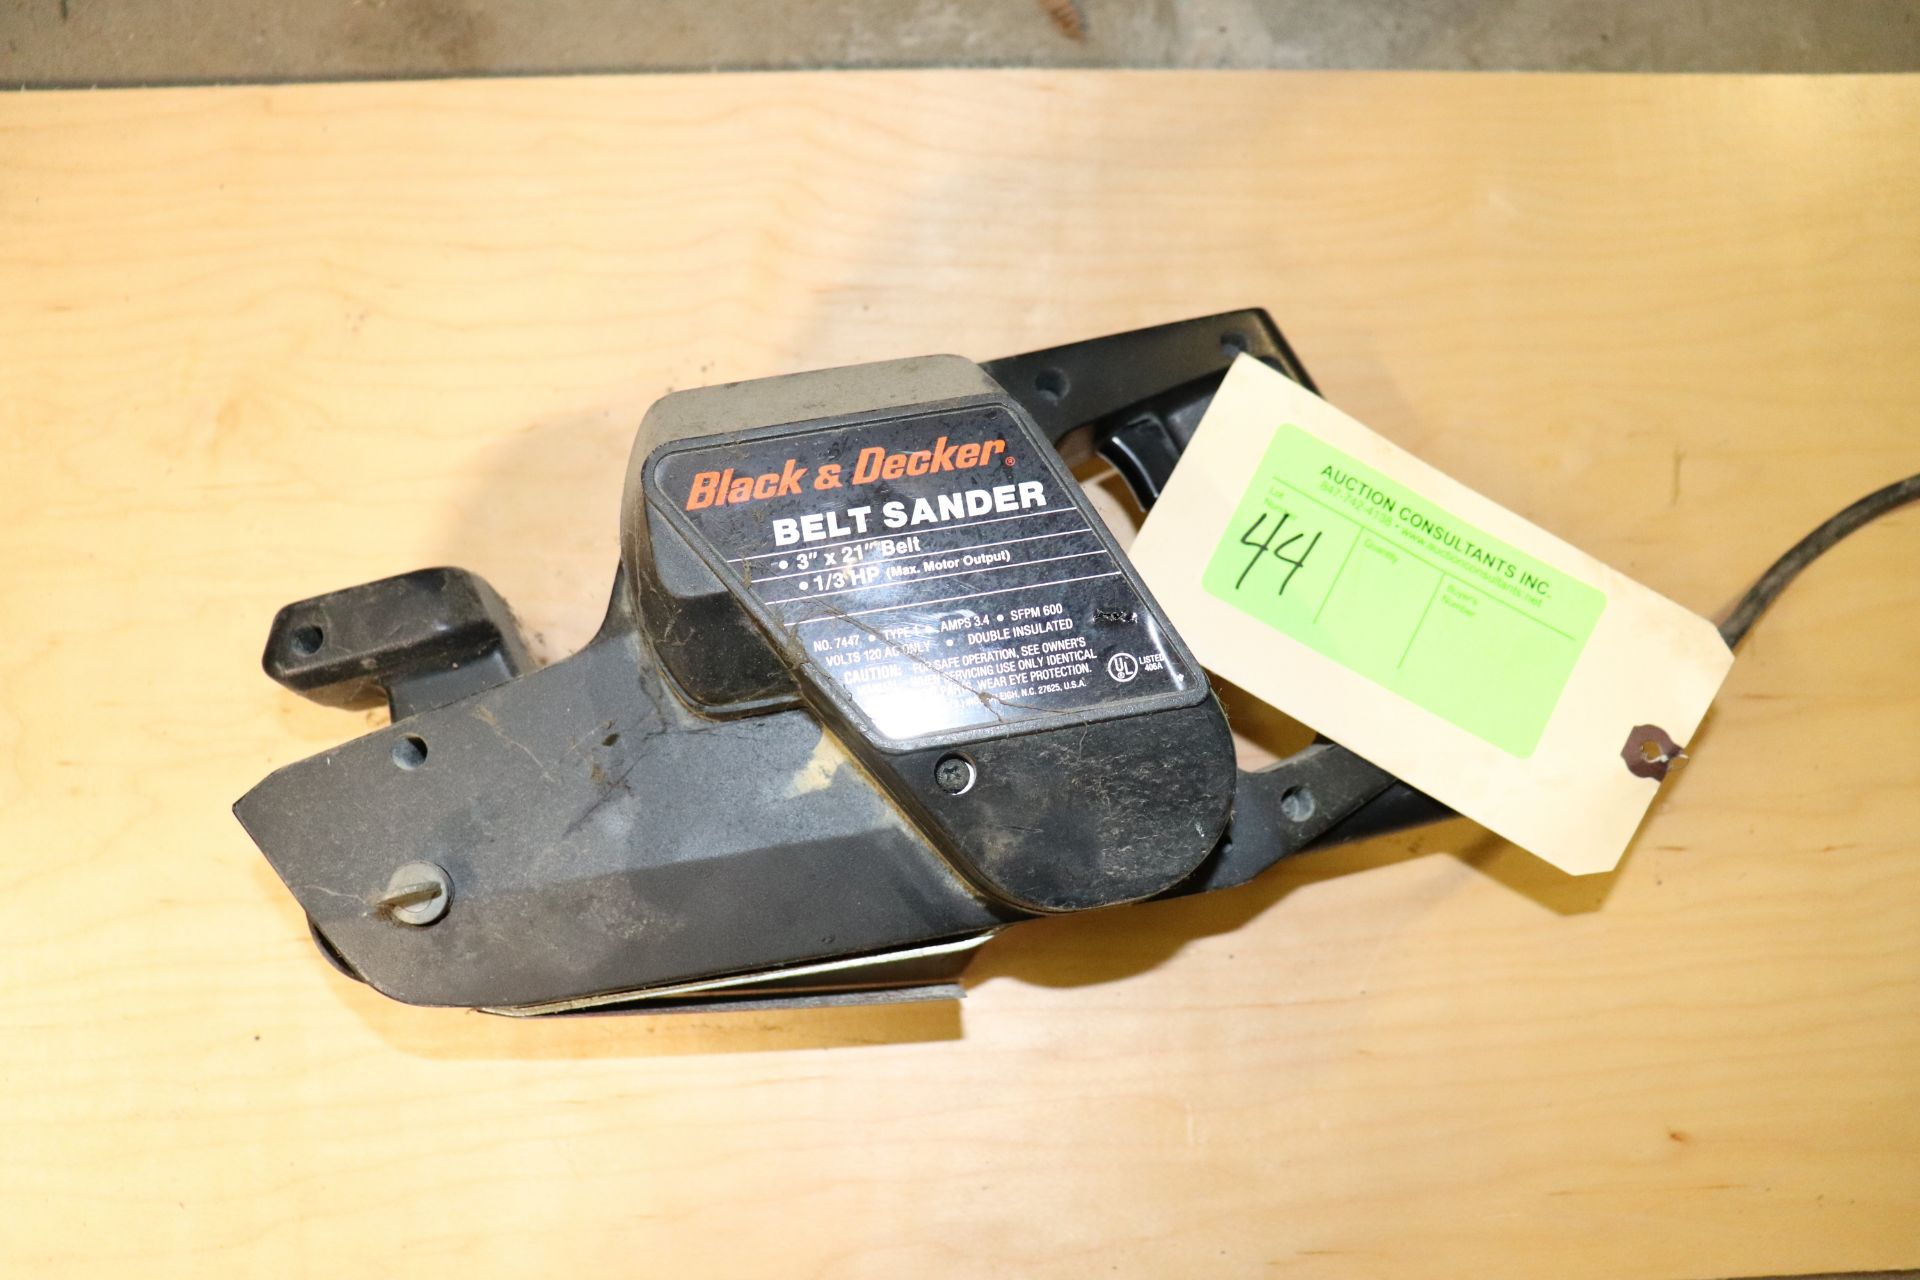 Black & Decker belt sander, 3" x 21", 1/3 hp